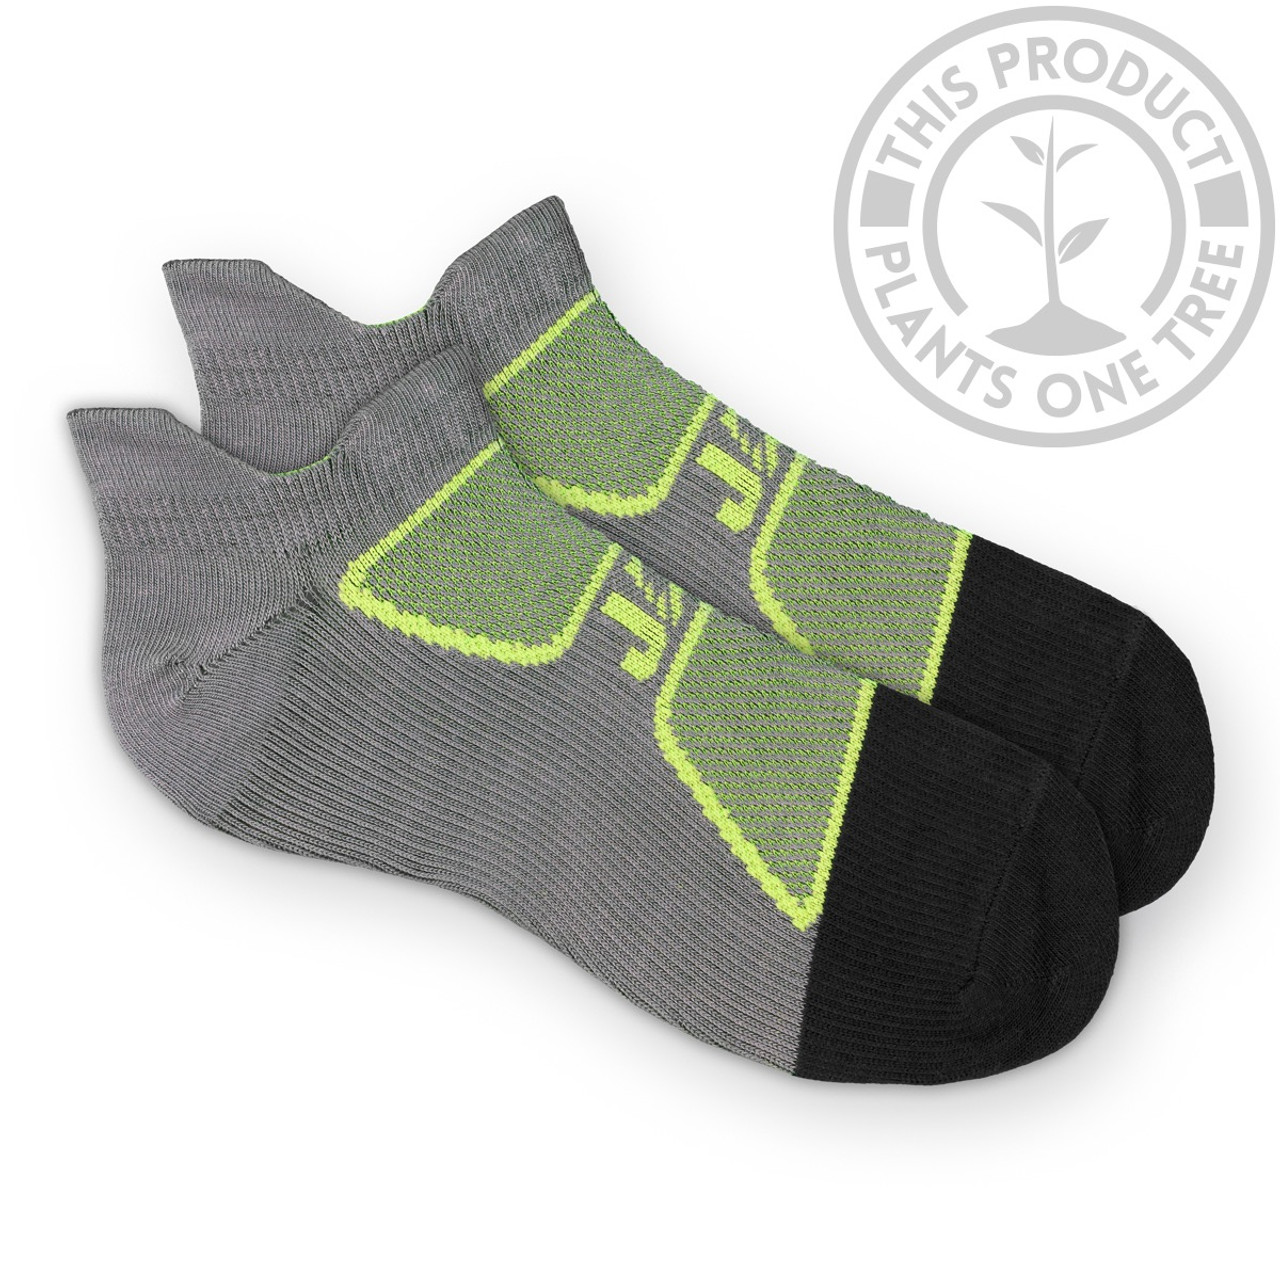 Bamboo Running Tab Socks by EcoSox-3 pairs womens sport soft socks. Mens 